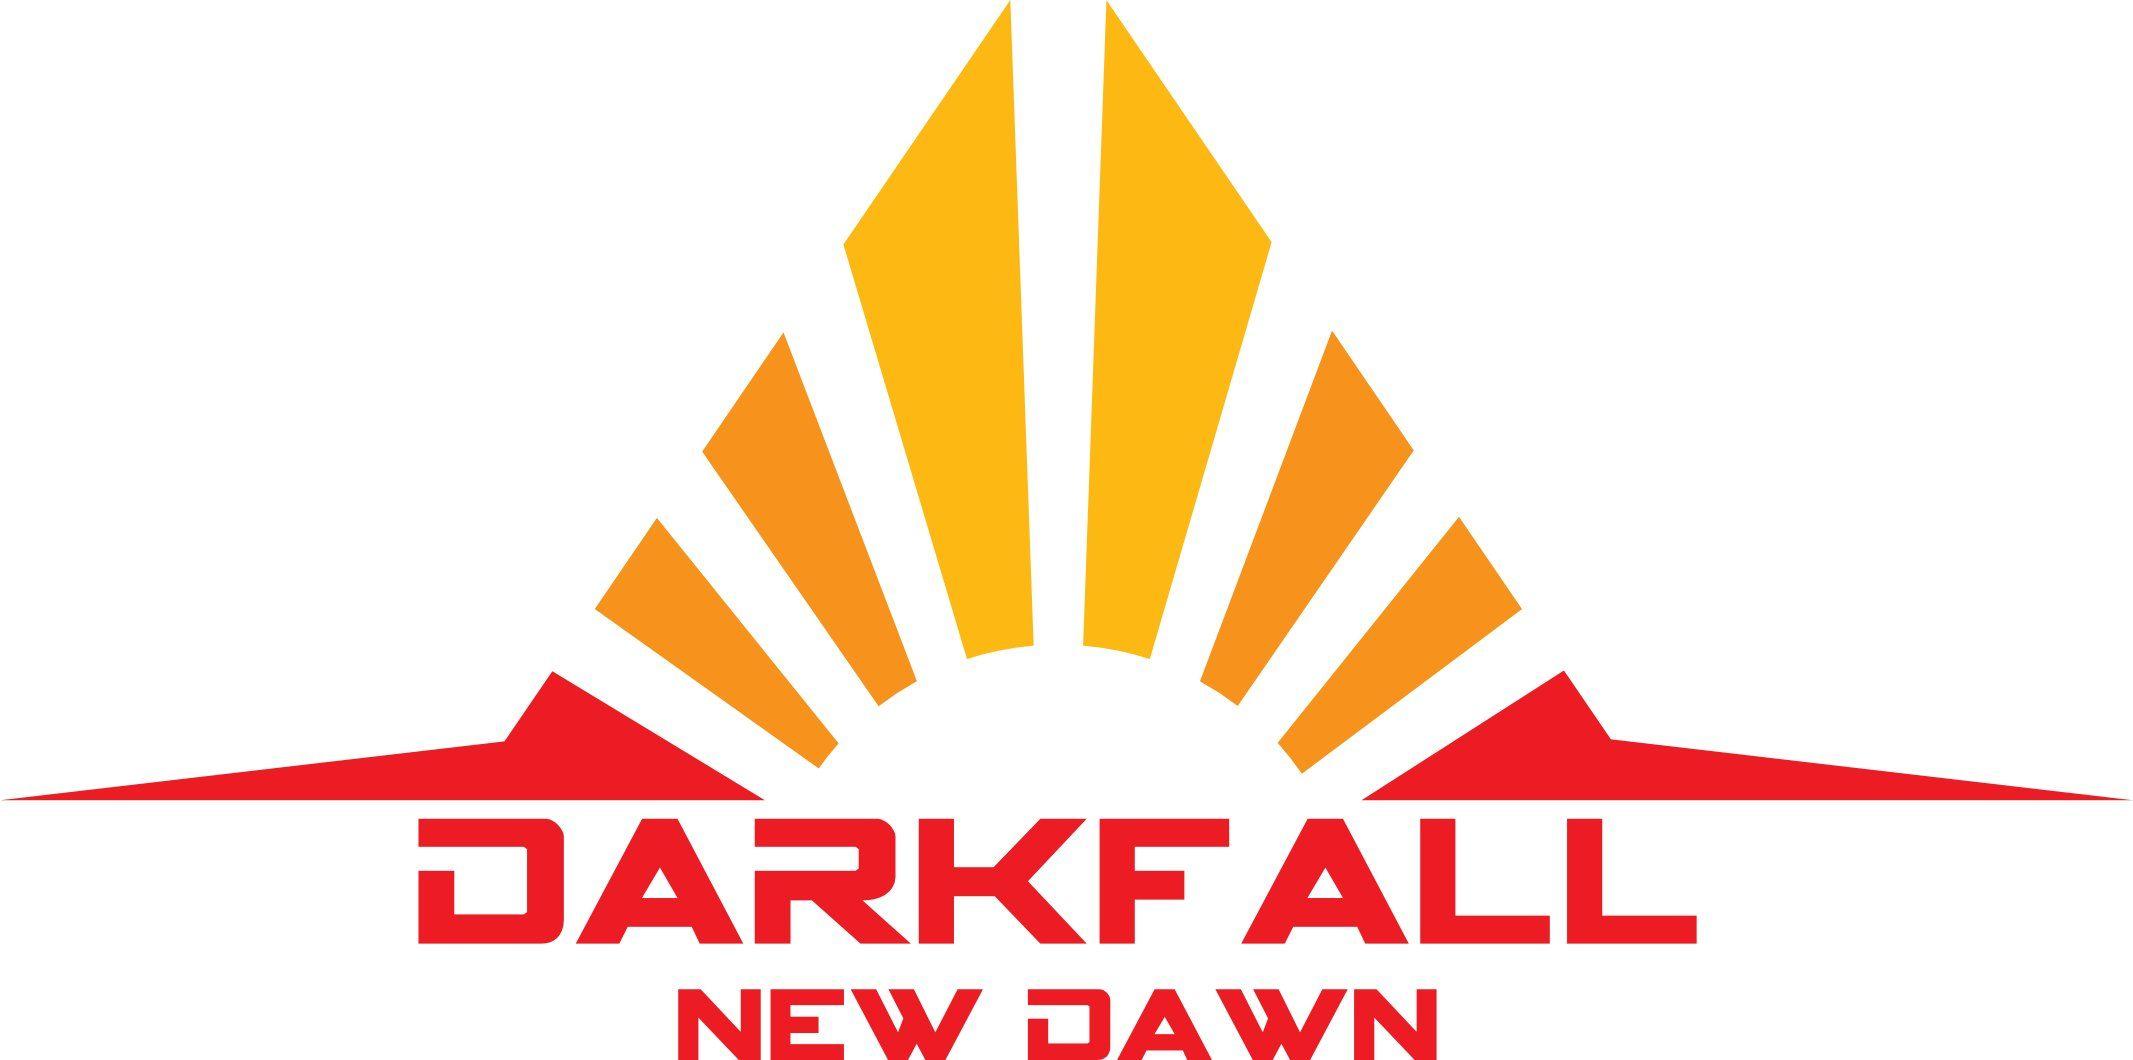 Dawn Logo - File:Darkfall New Dawn logo.jpg - Wikimedia Commons